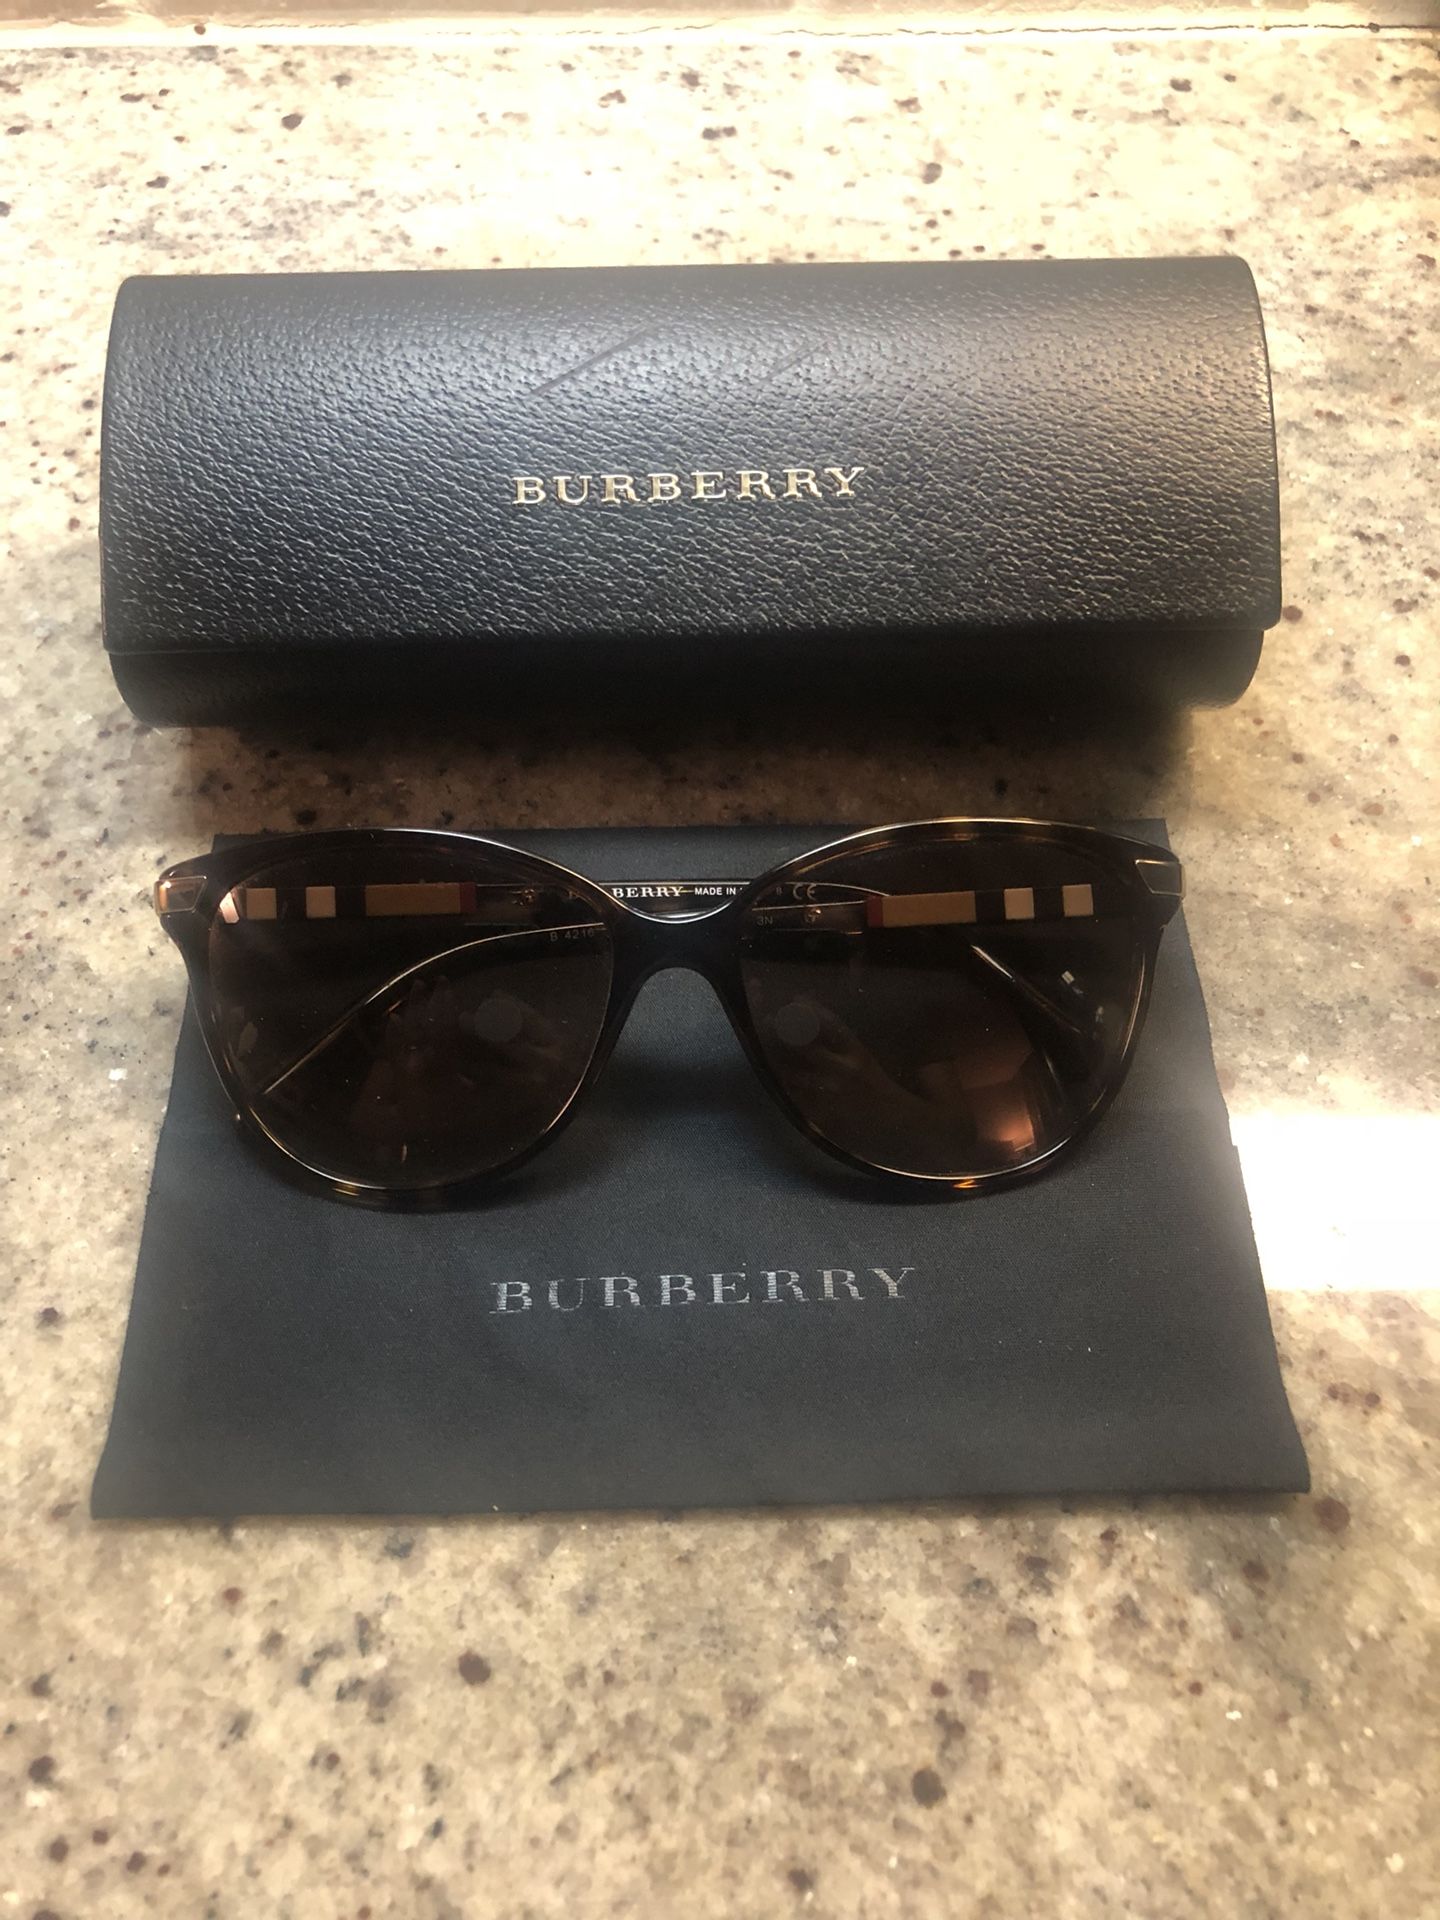 Burberry women sunglasses